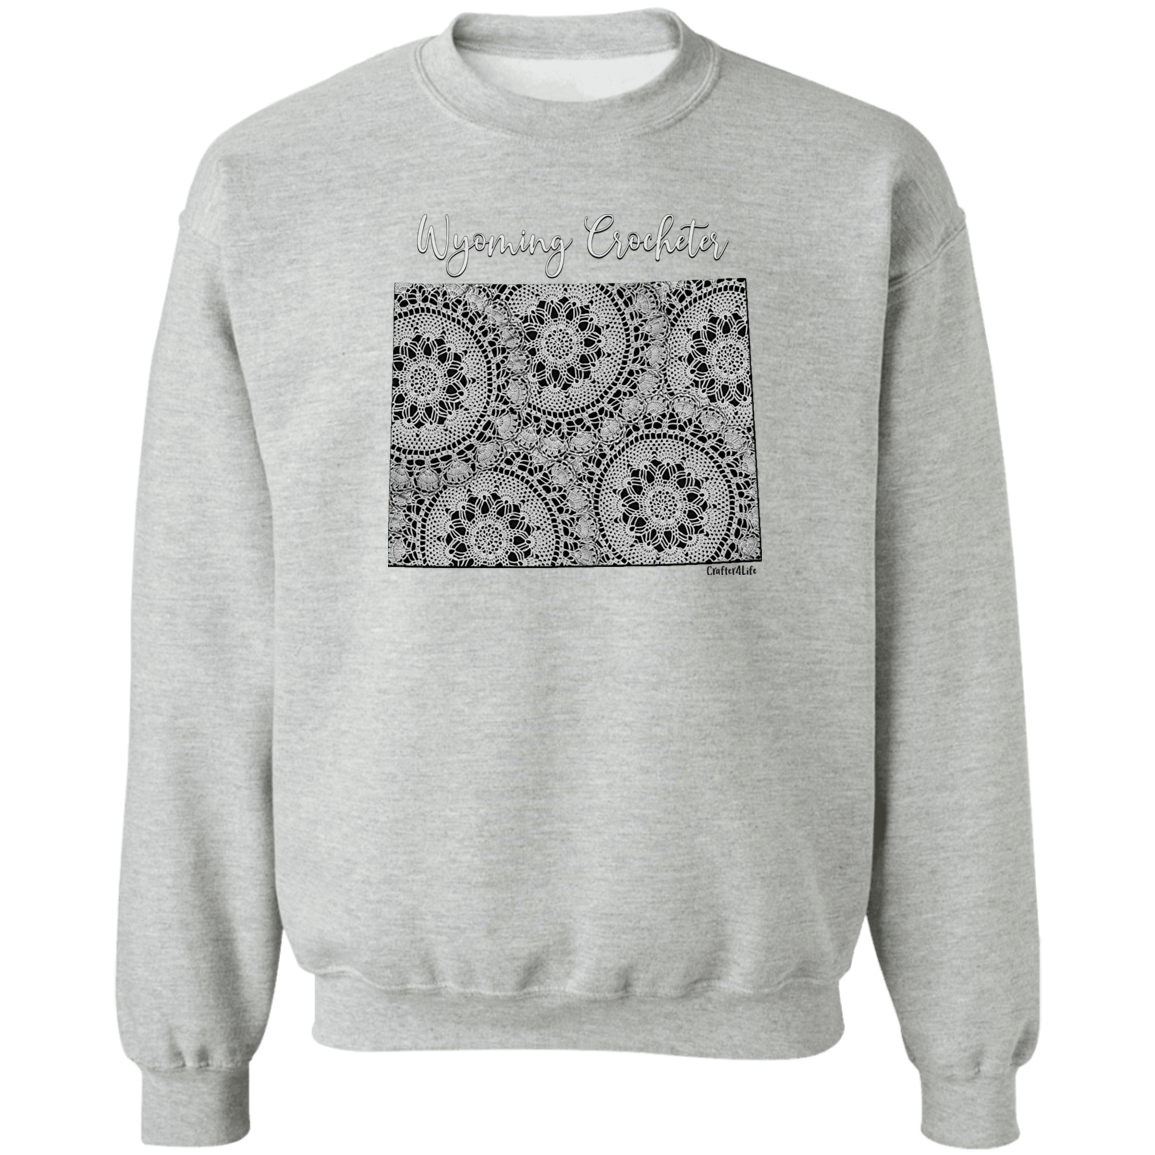 Wyoming Crocheter Crewneck Pullover Sweatshirt